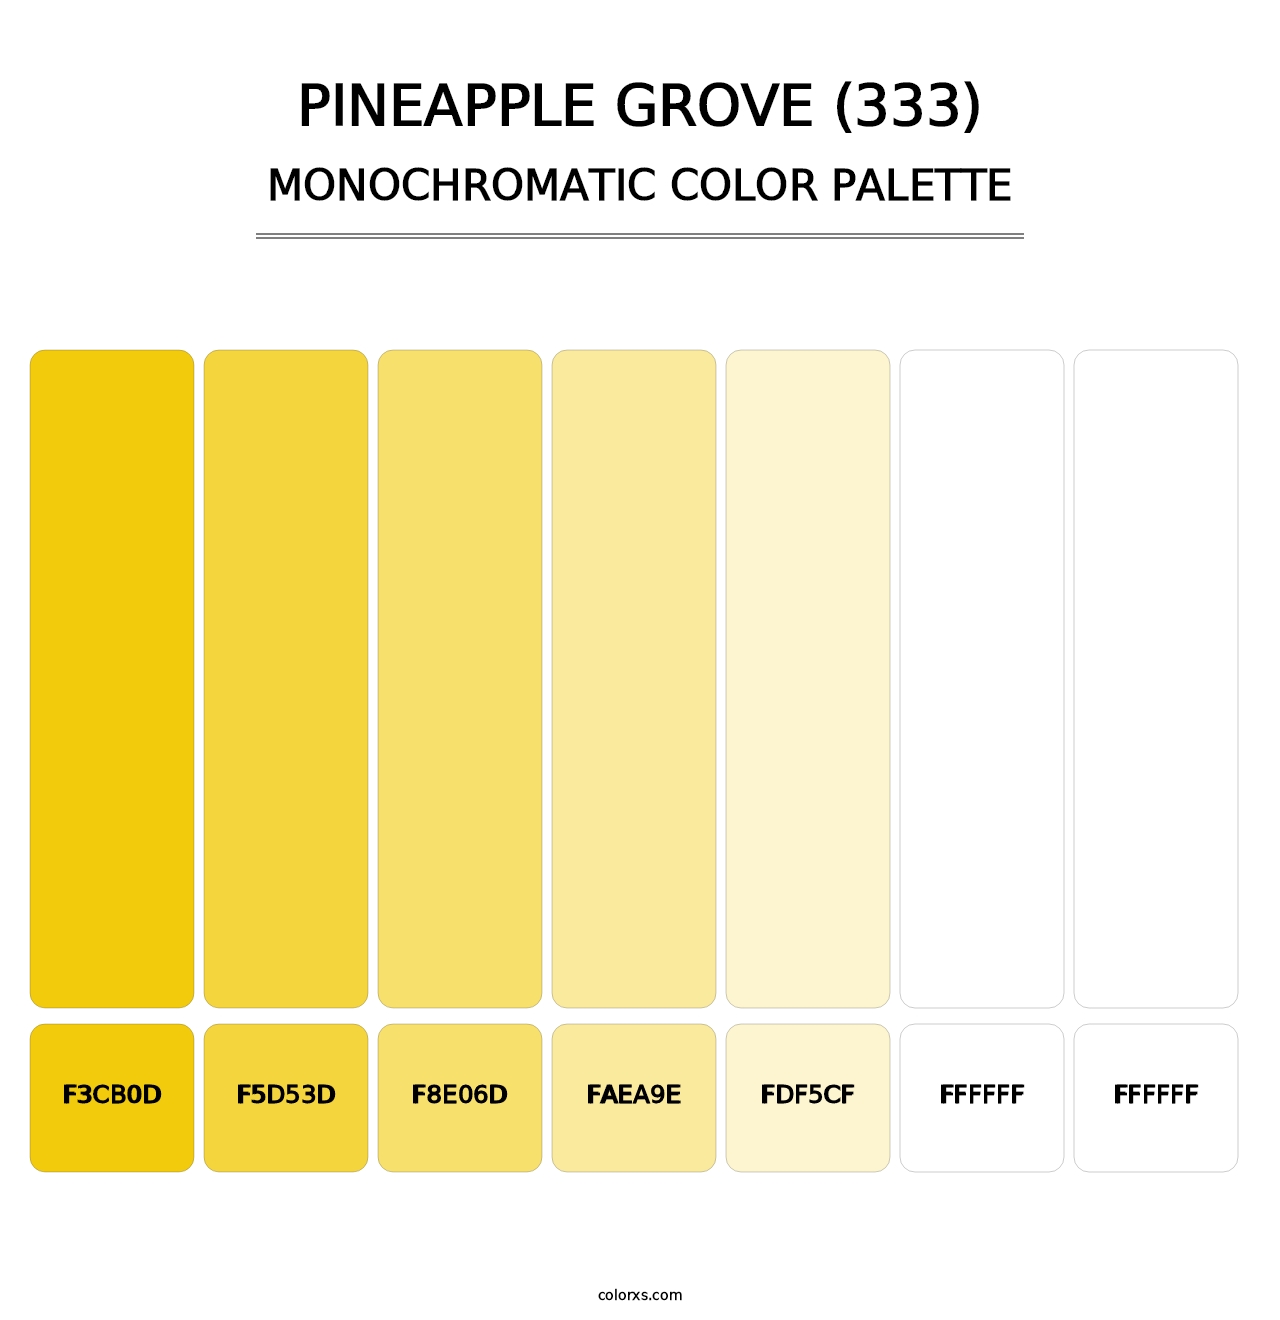 Pineapple Grove (333) - Monochromatic Color Palette